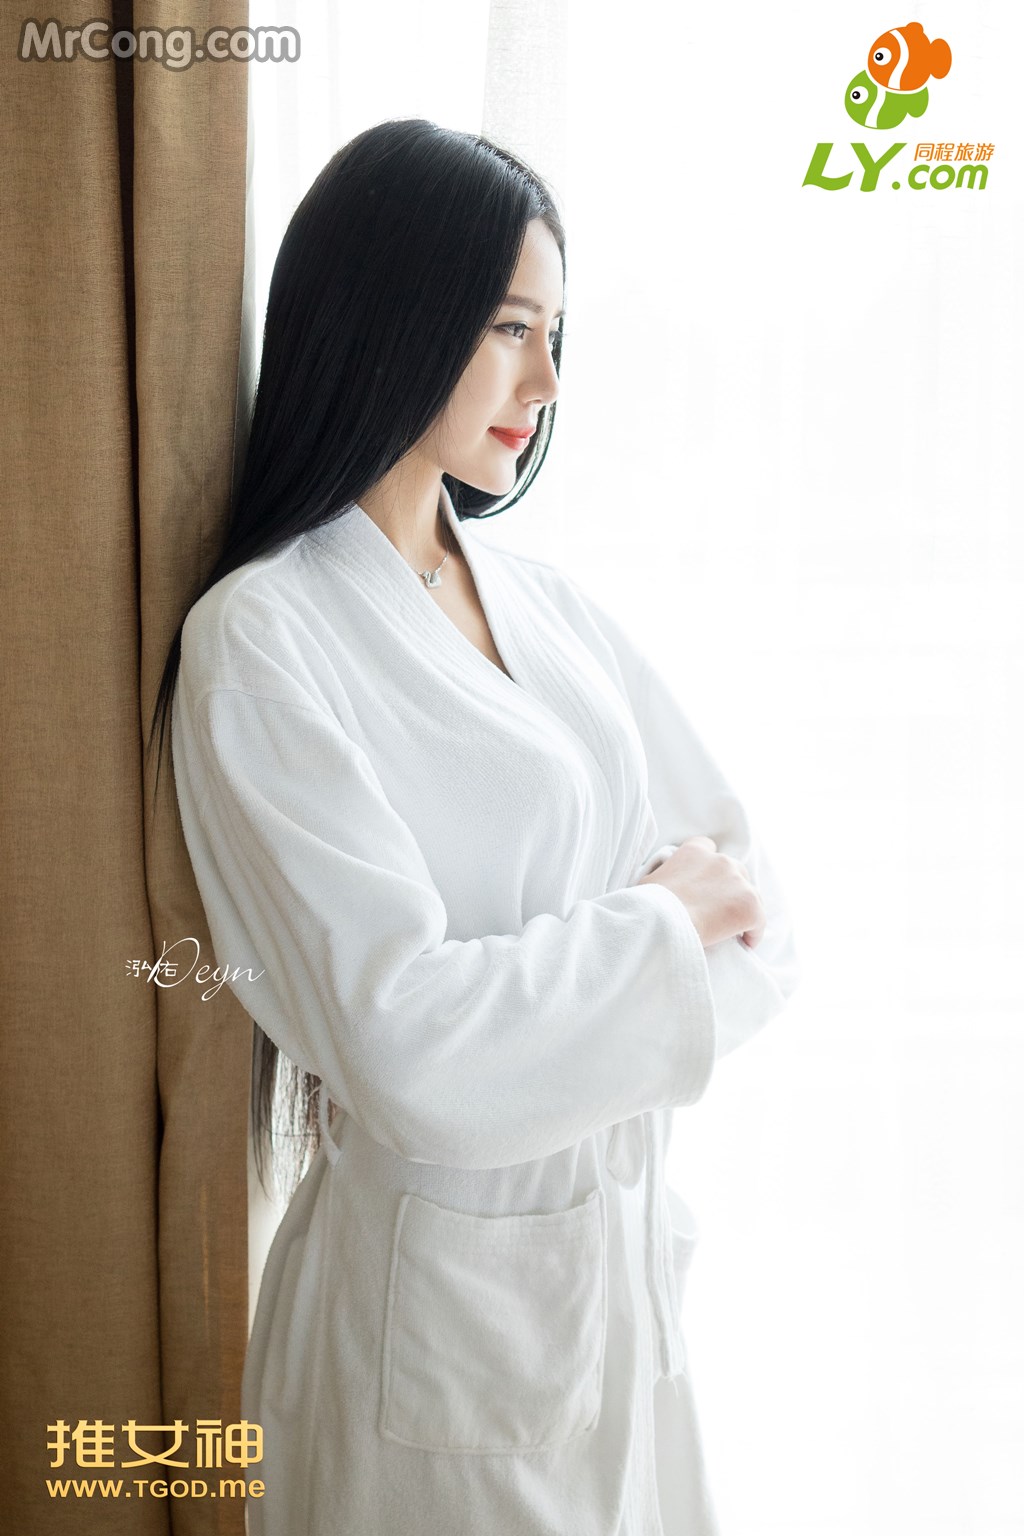 TGOD 2014-09-24: Model Xu Yan Xin (徐妍馨) (66 pictures) photo 2-6